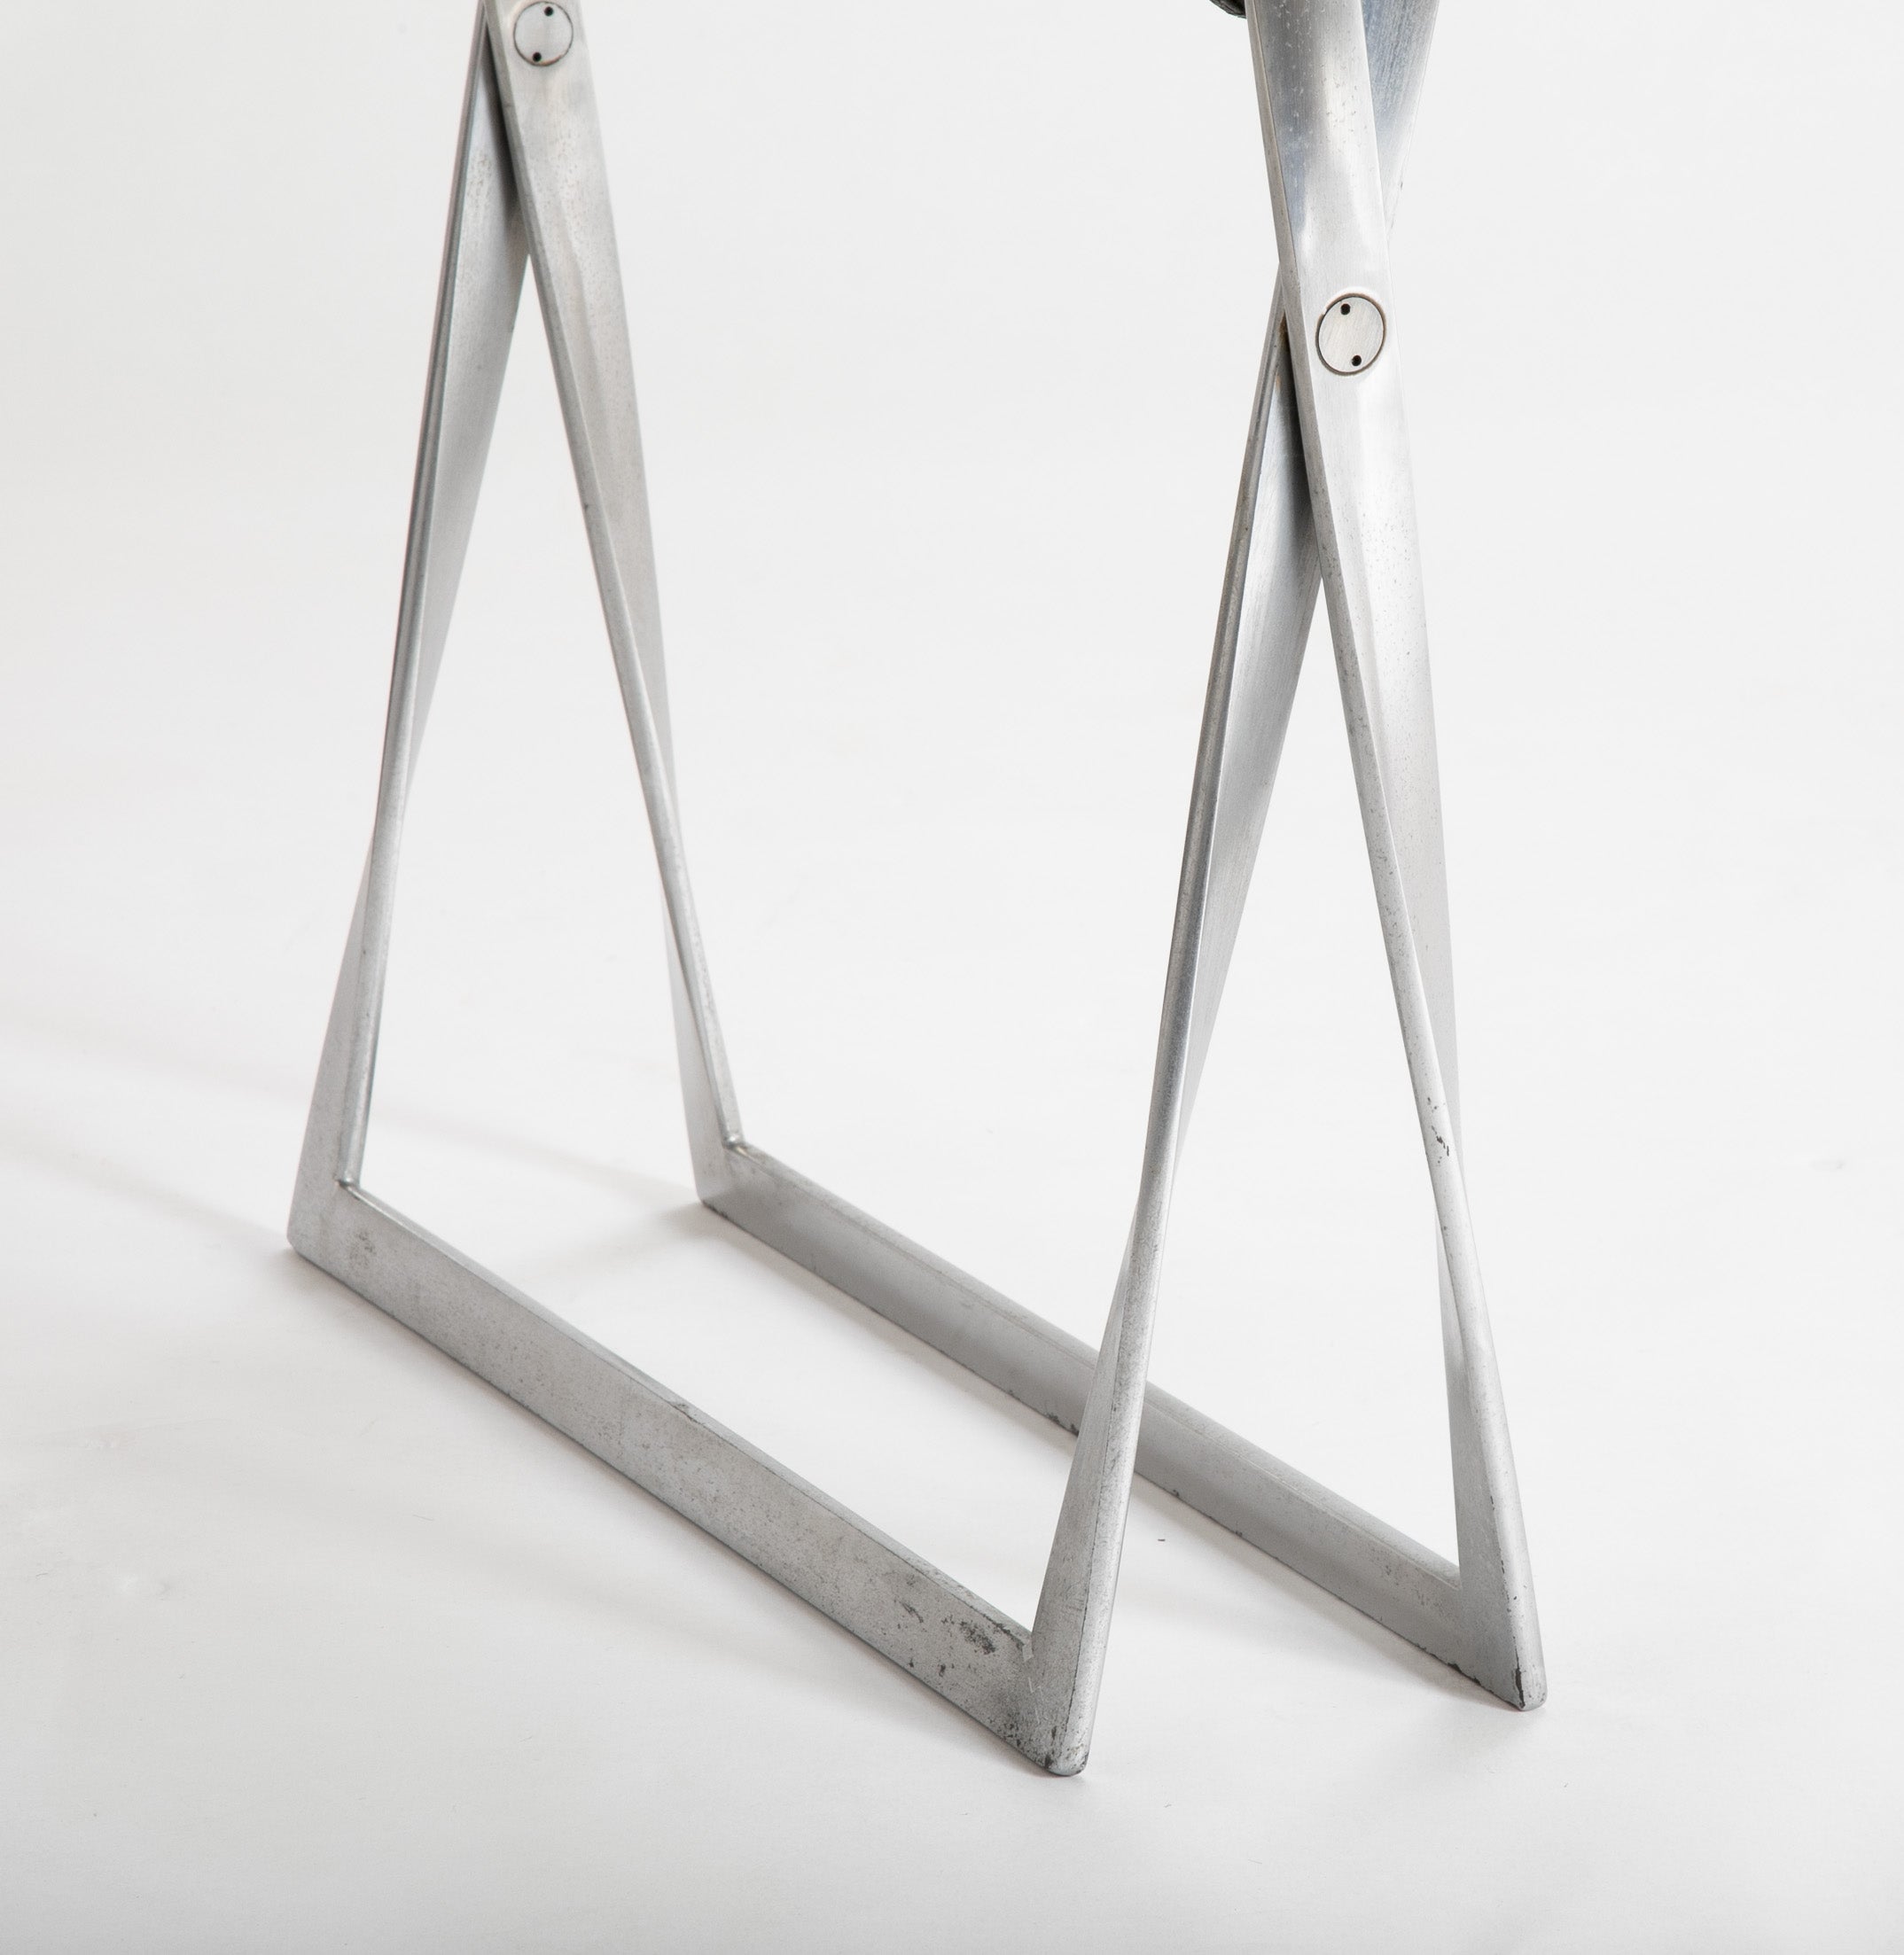 Pair of Poul Kjaerholm PK91 Folding Stools Created by E. Kold Christensen